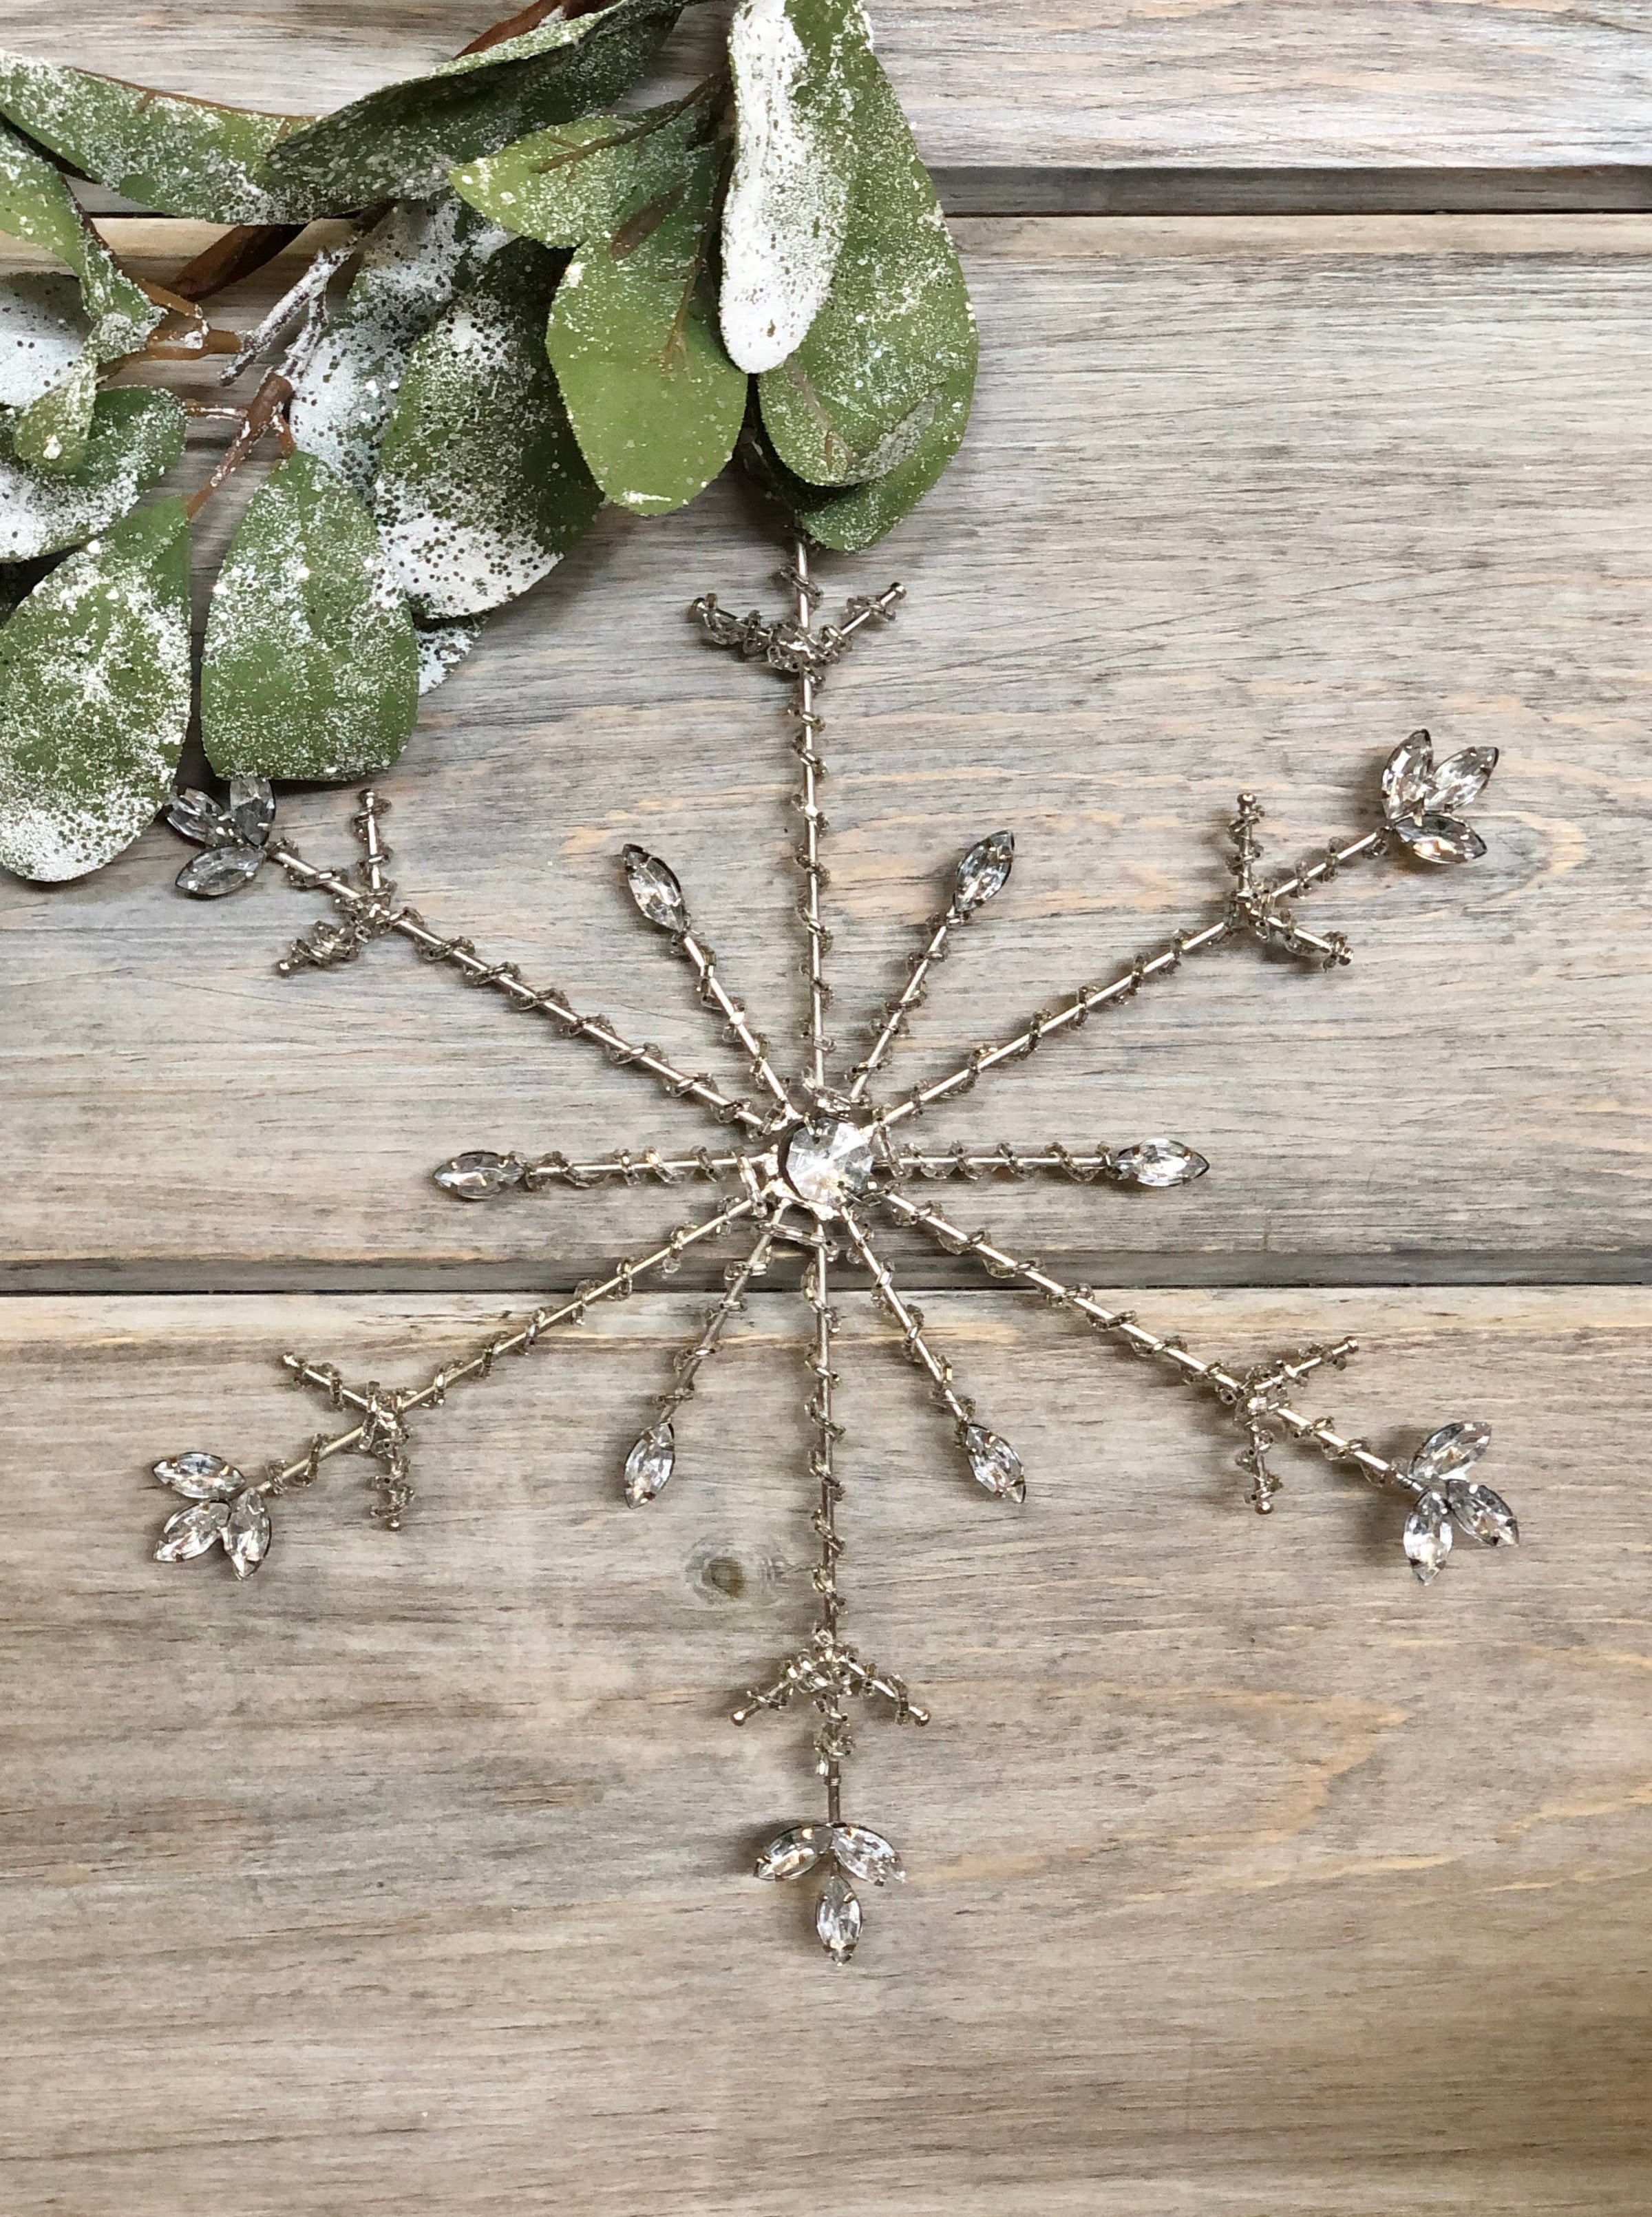 Enameled Small Snowflake Ornaments